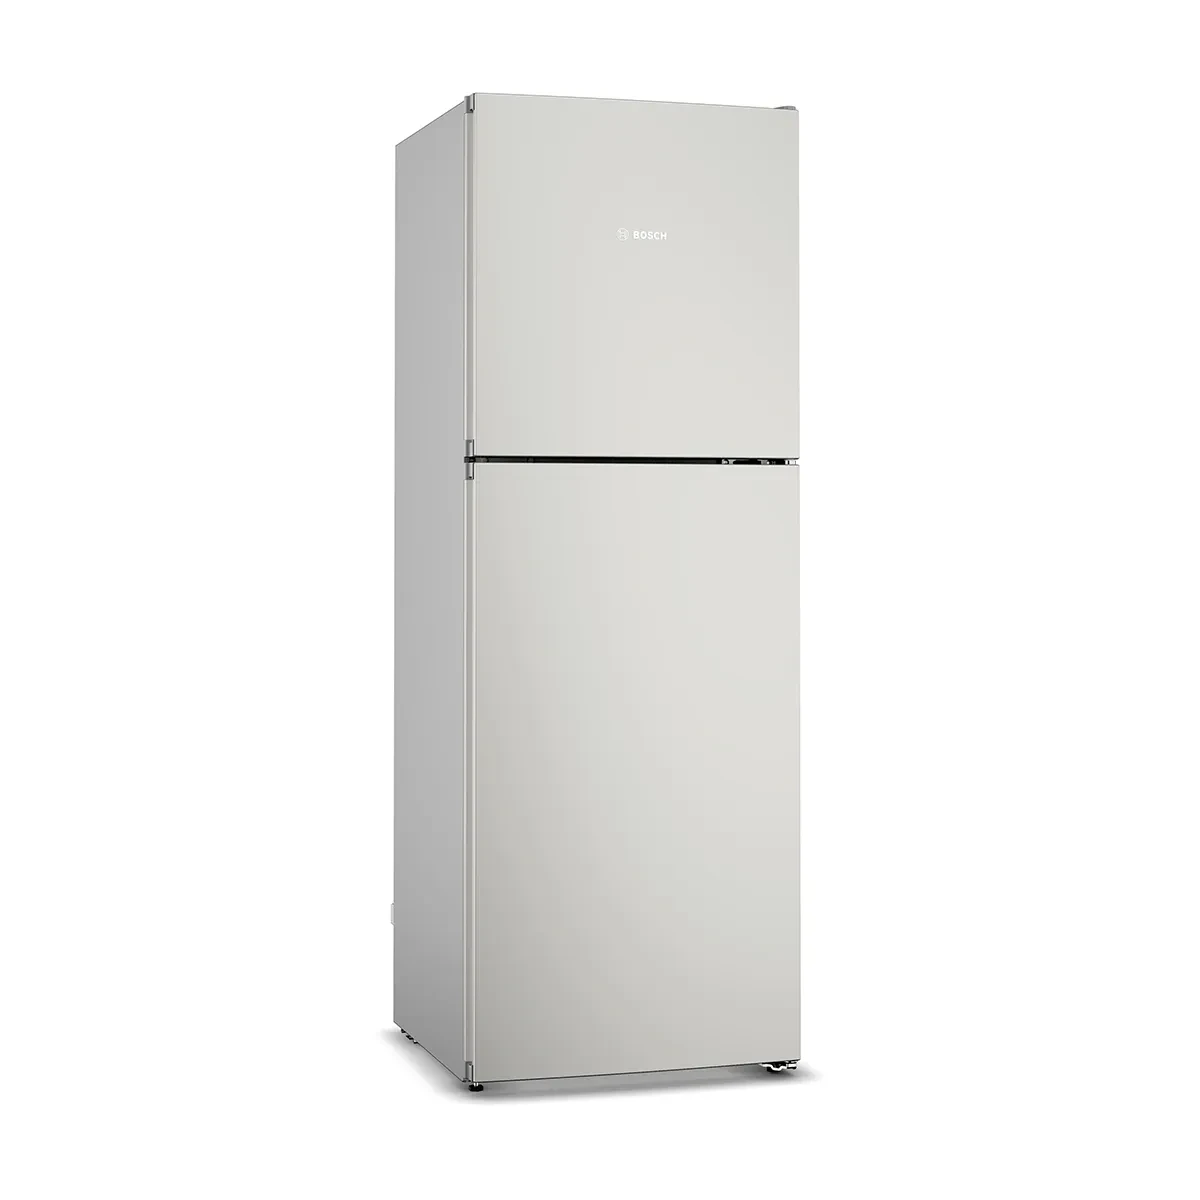 Bosch Serie 2 No-Frost Freestanding Refrigerator, 253 Liters, Inox- KDN30N12E8